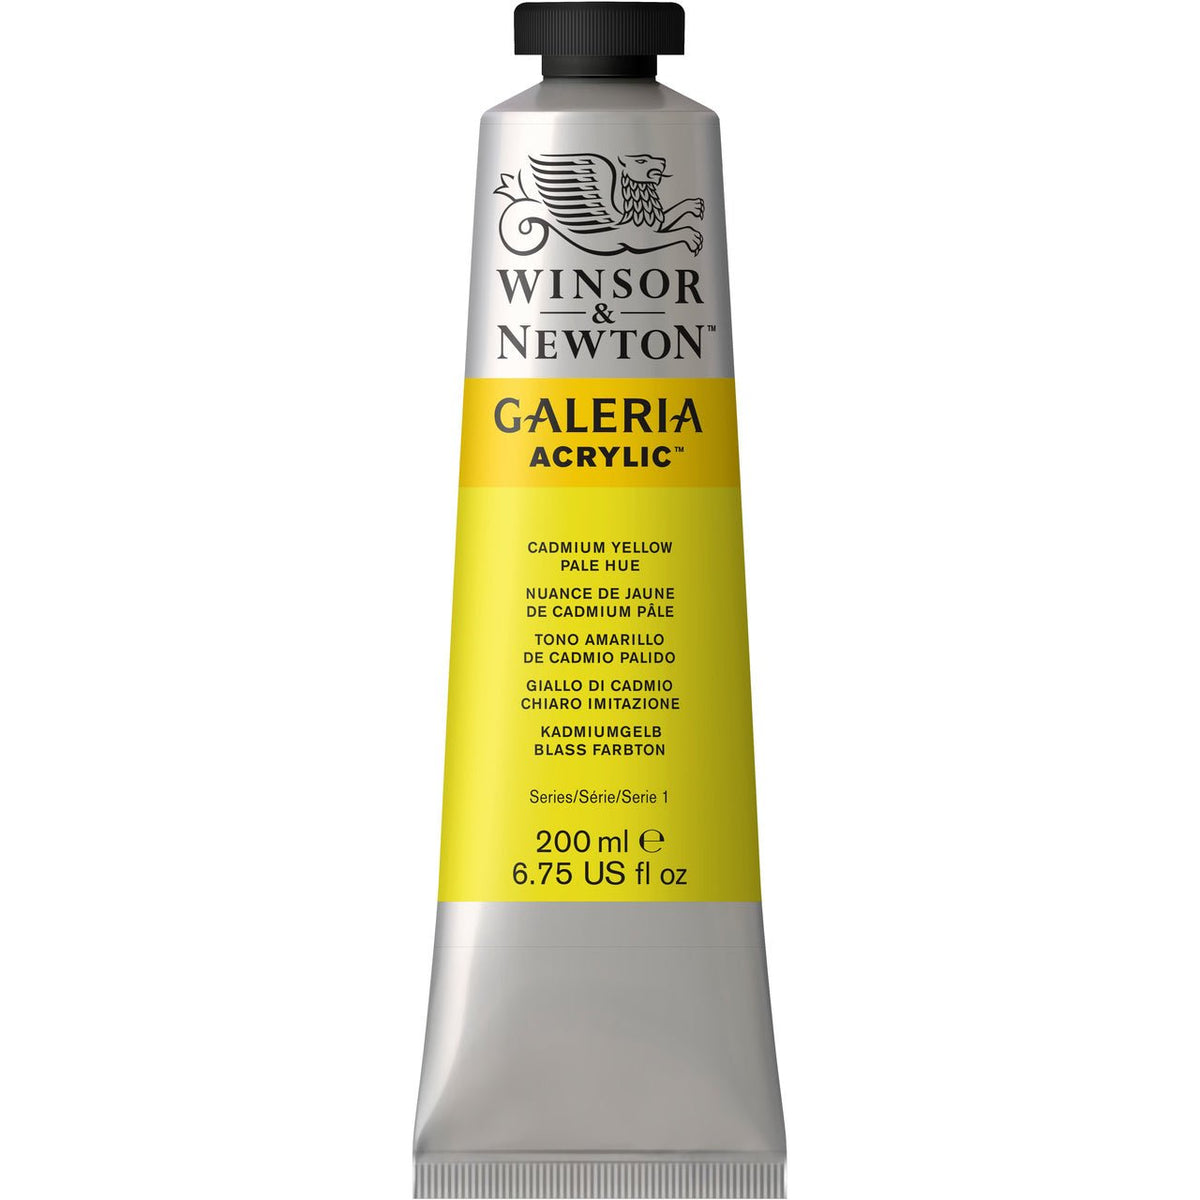 Winsor & Newton Galeria Acrylic Cadmium Yellow Pale Hue 200 ml - merriartist.com